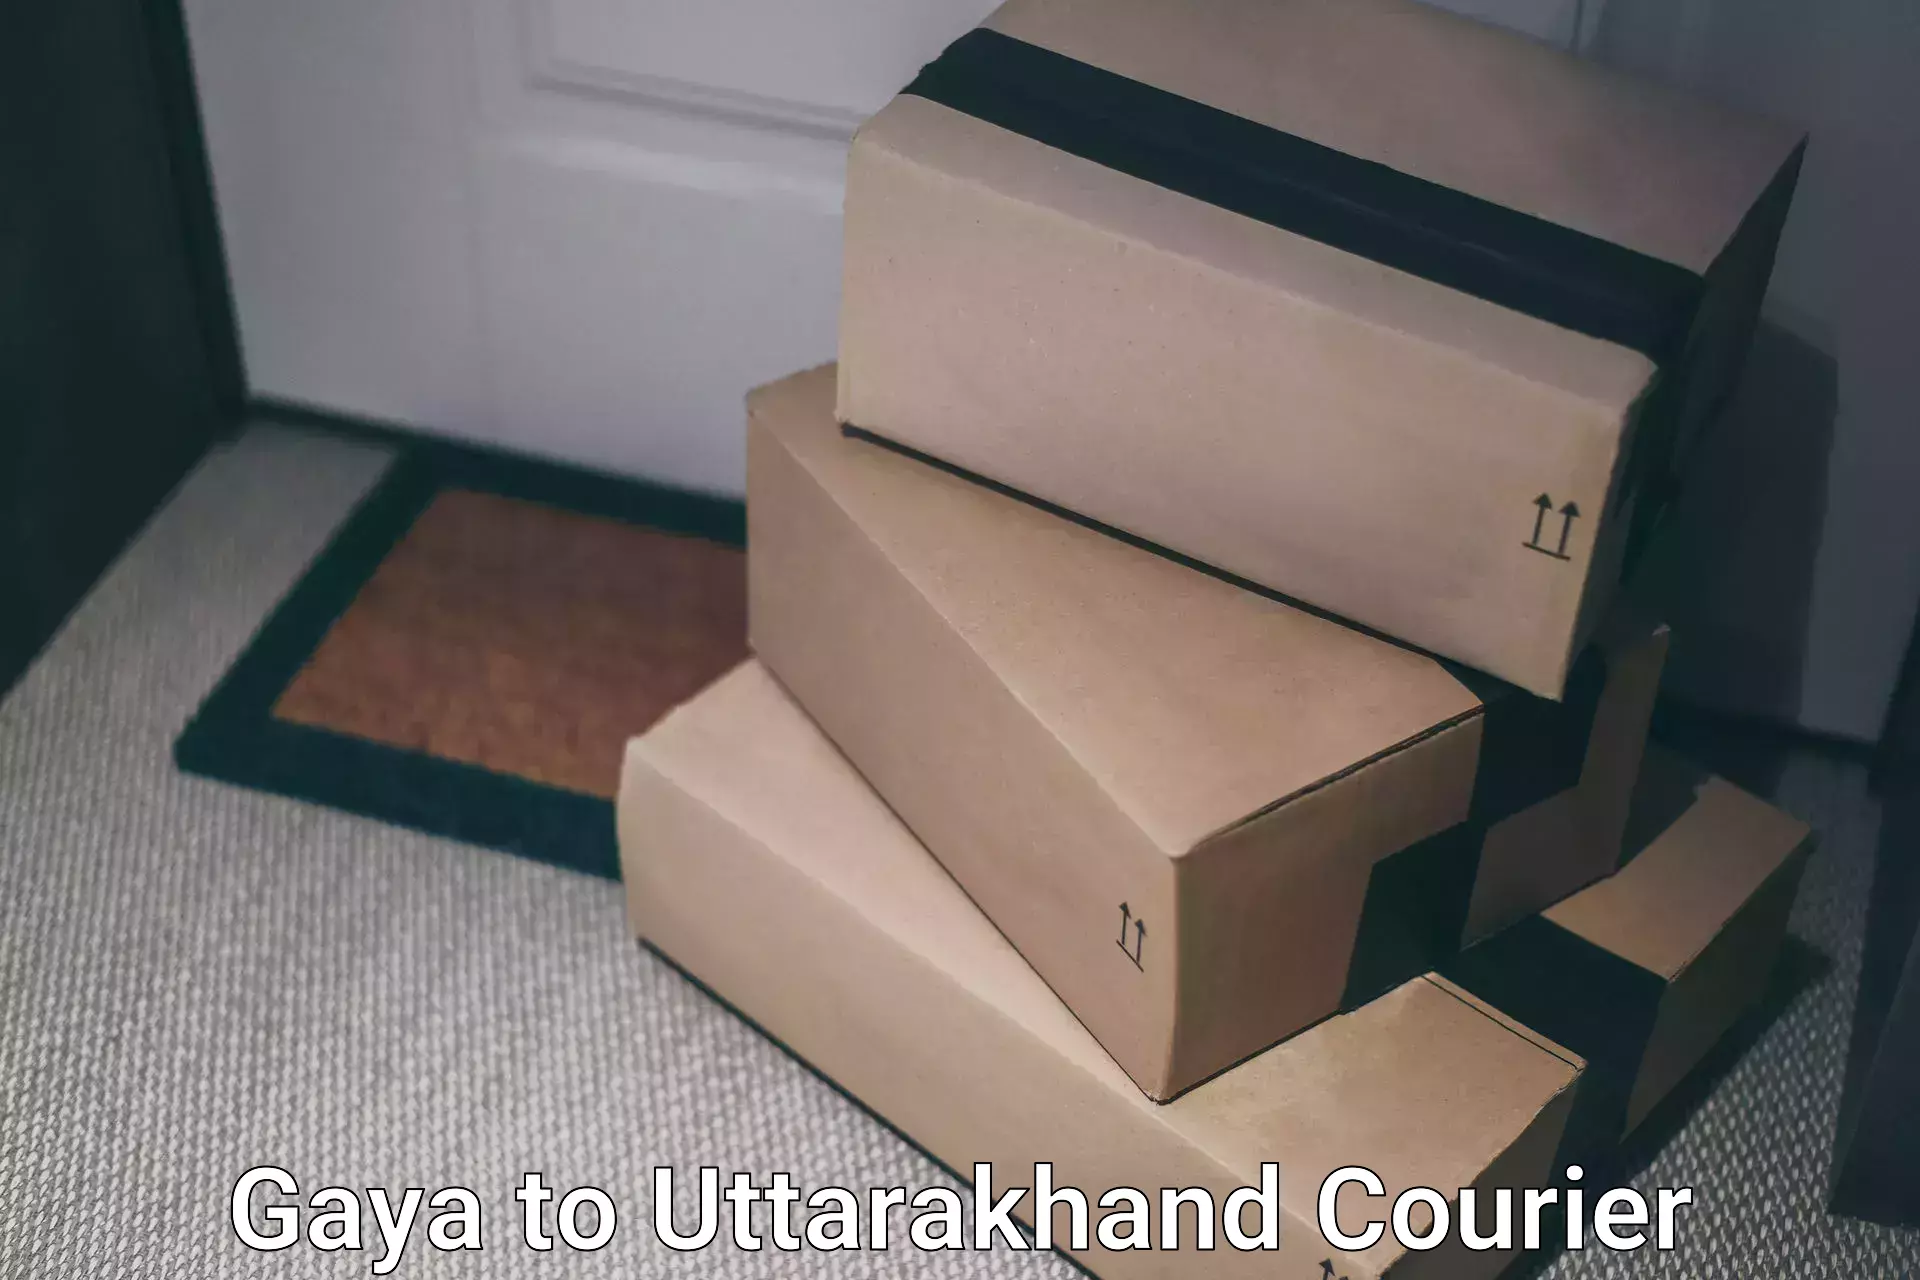 Express delivery capabilities Gaya to Dehradun